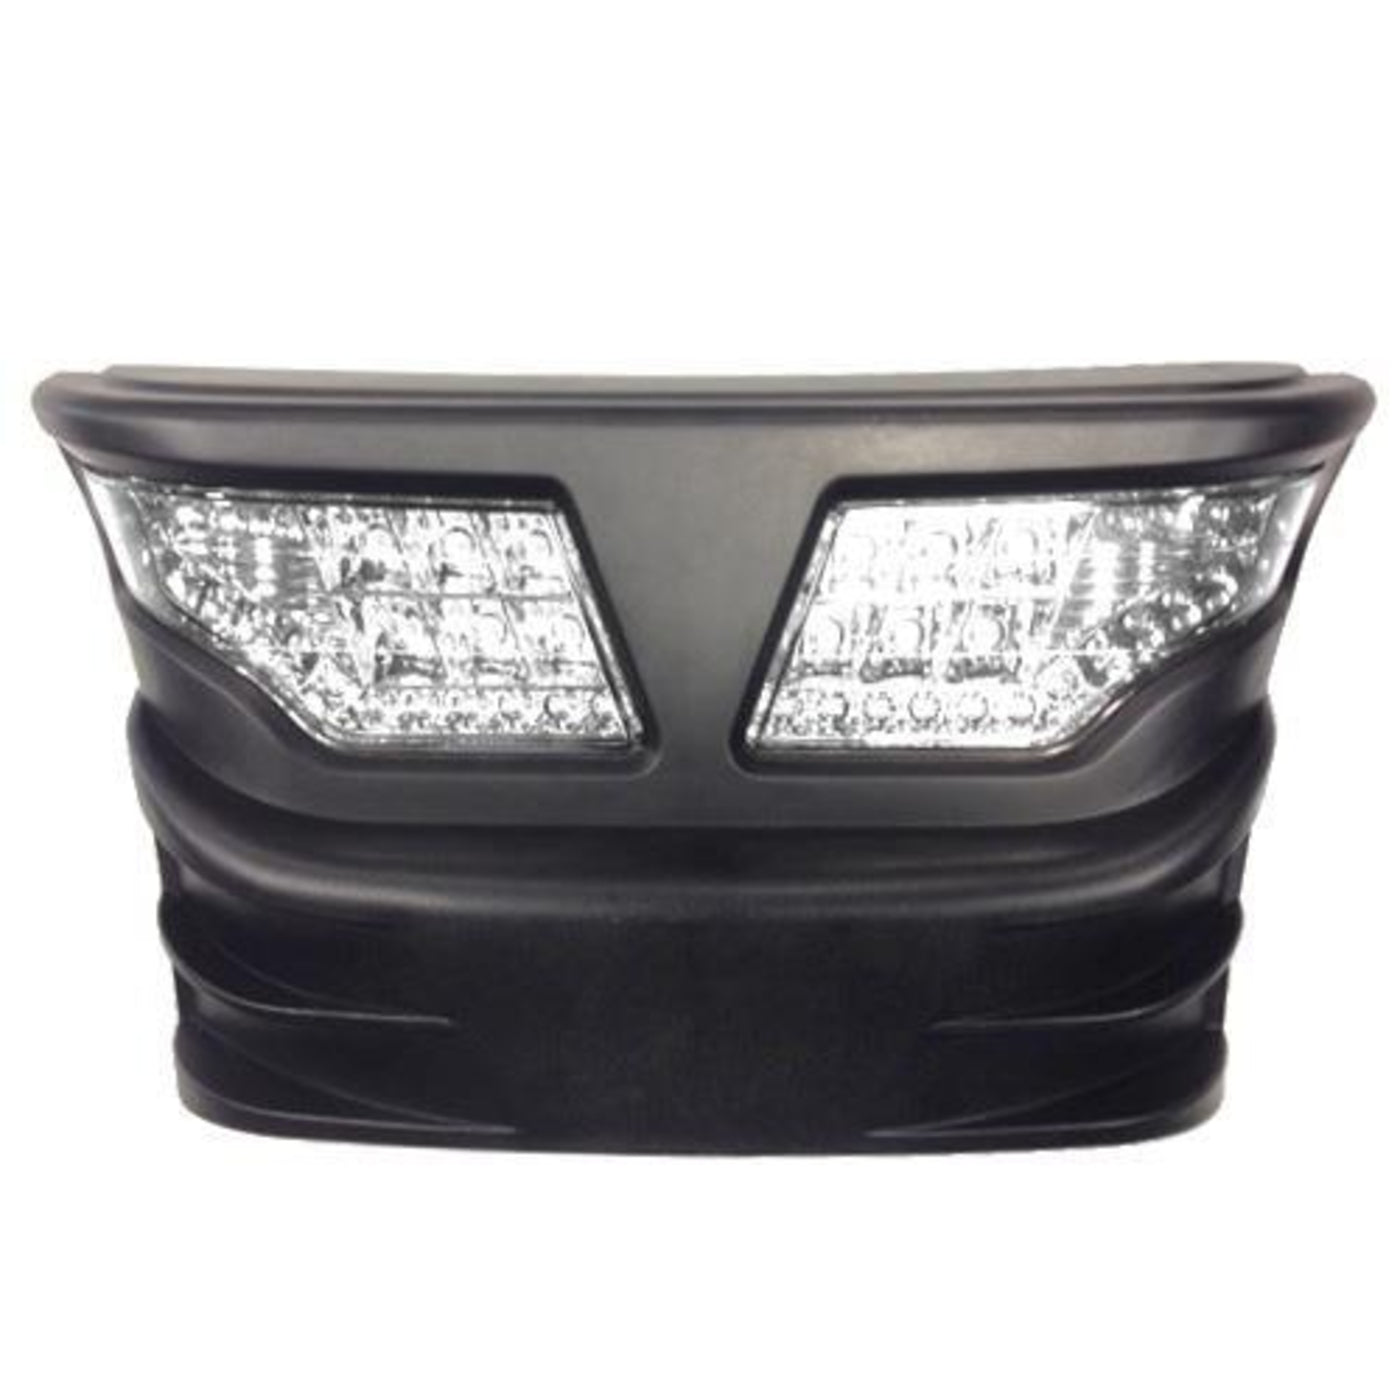 MadJax® LED Replacement Headlight "“ Fits Club Car Precedent